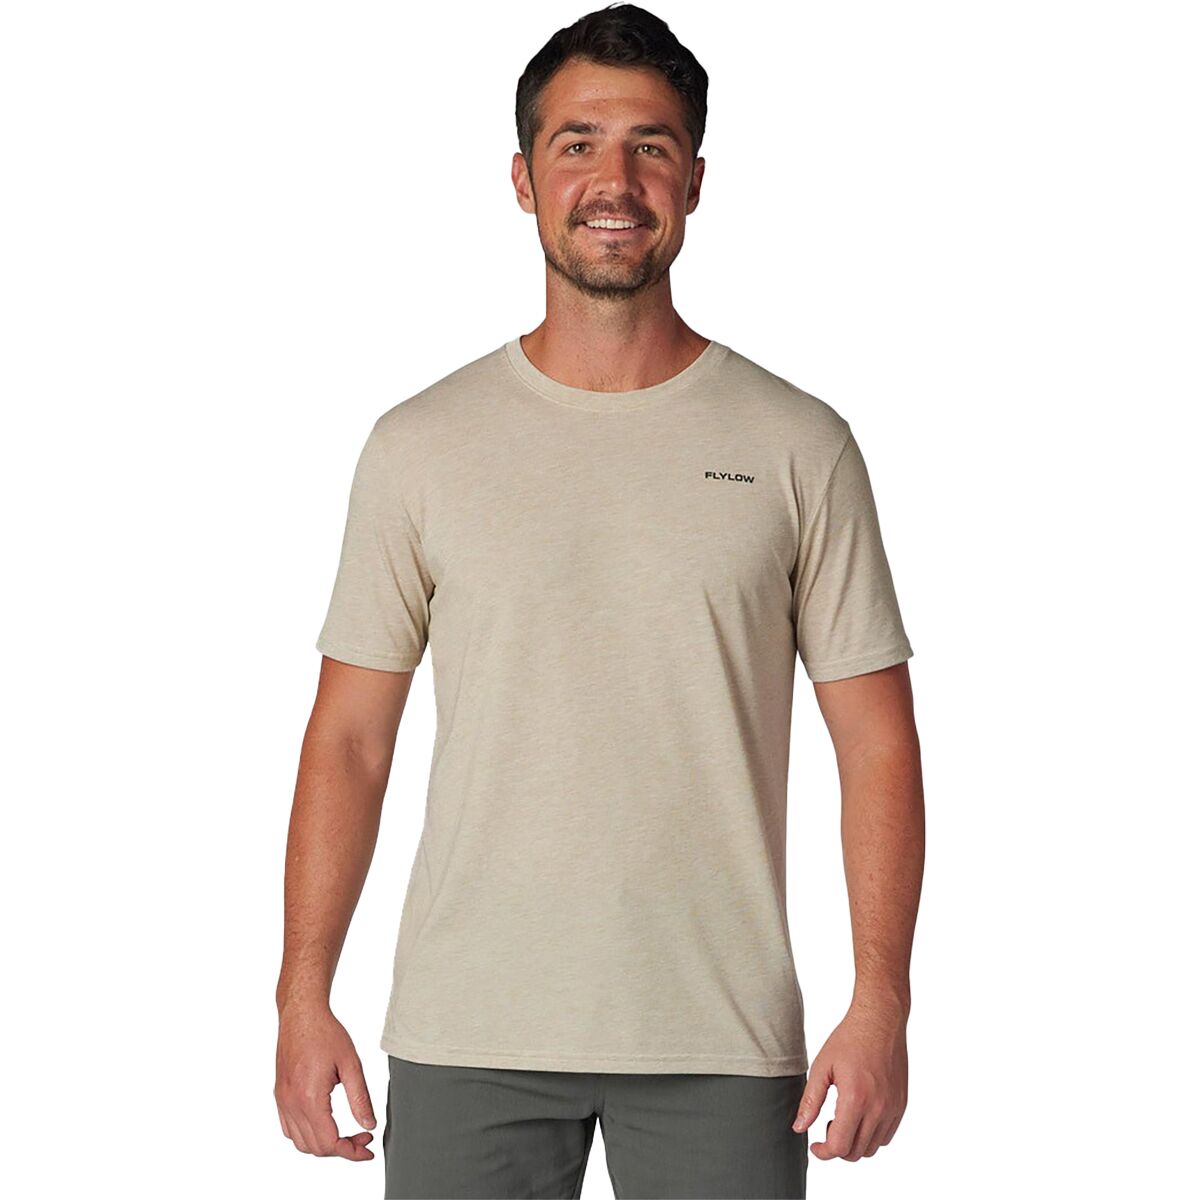 Flylow Robb Short-Sleeve Shirt - Men's